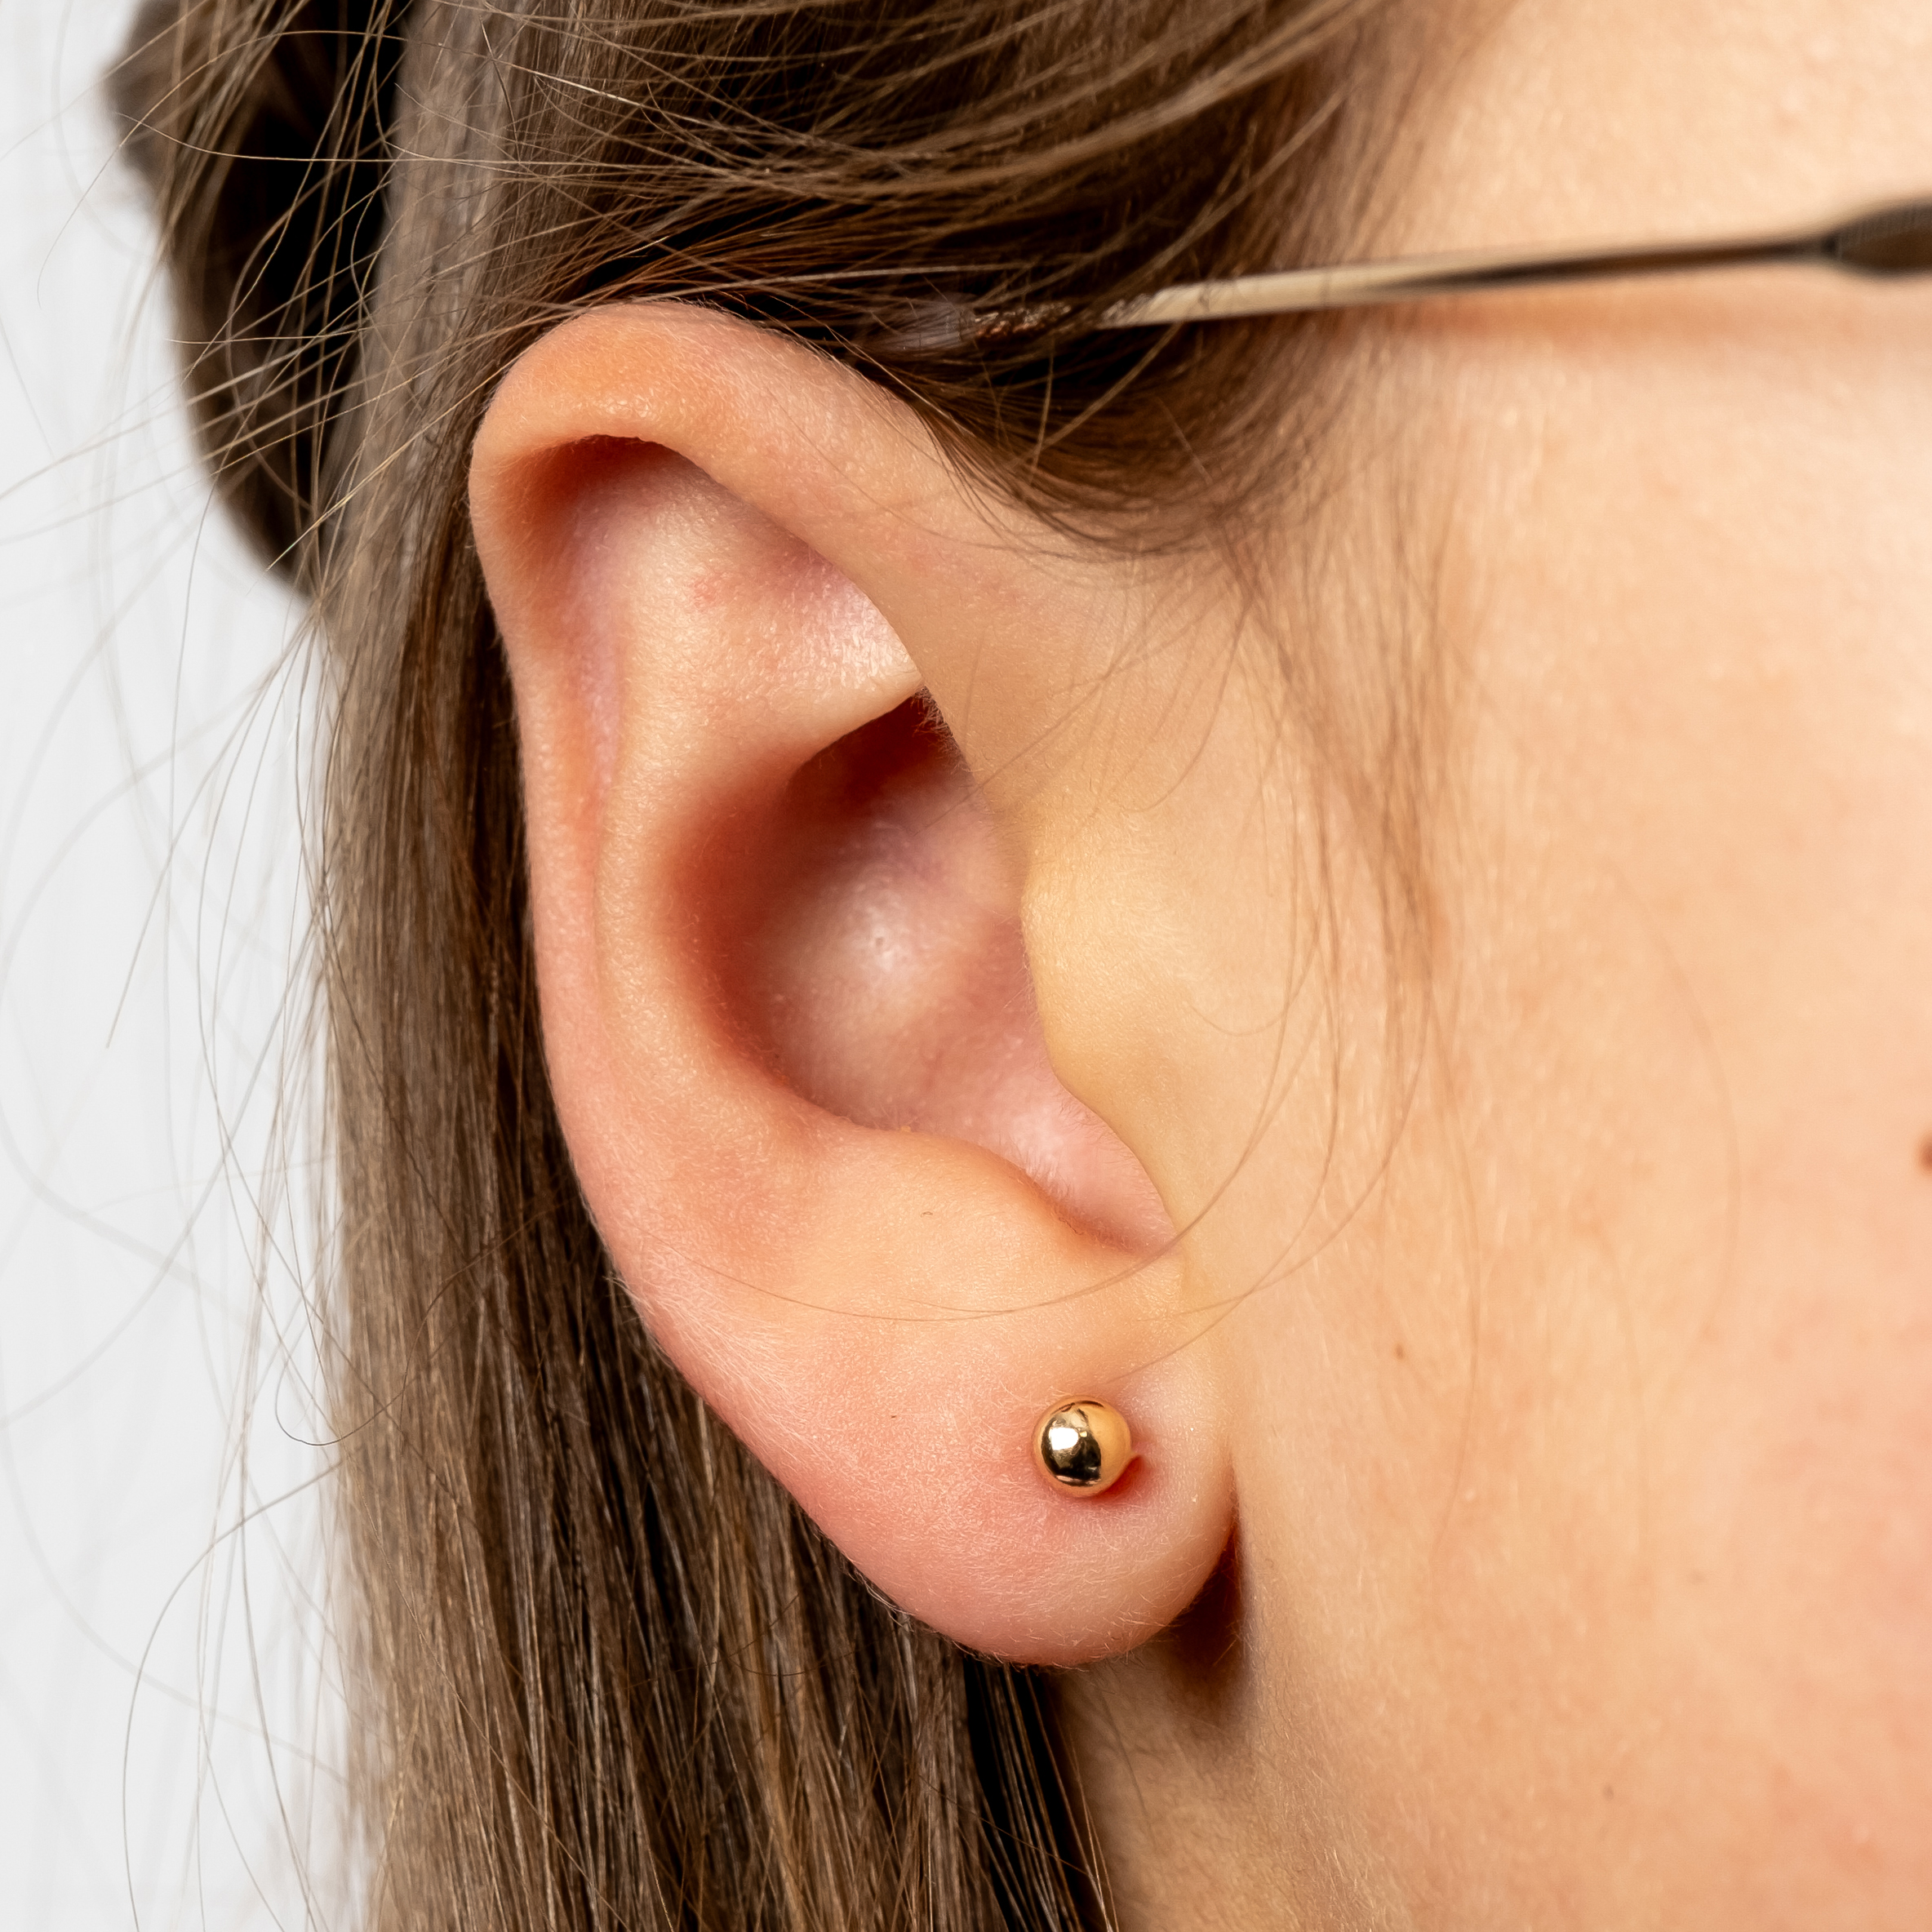 4mm Silver / Gold Ball Stud Earrings for Sensitive Ears